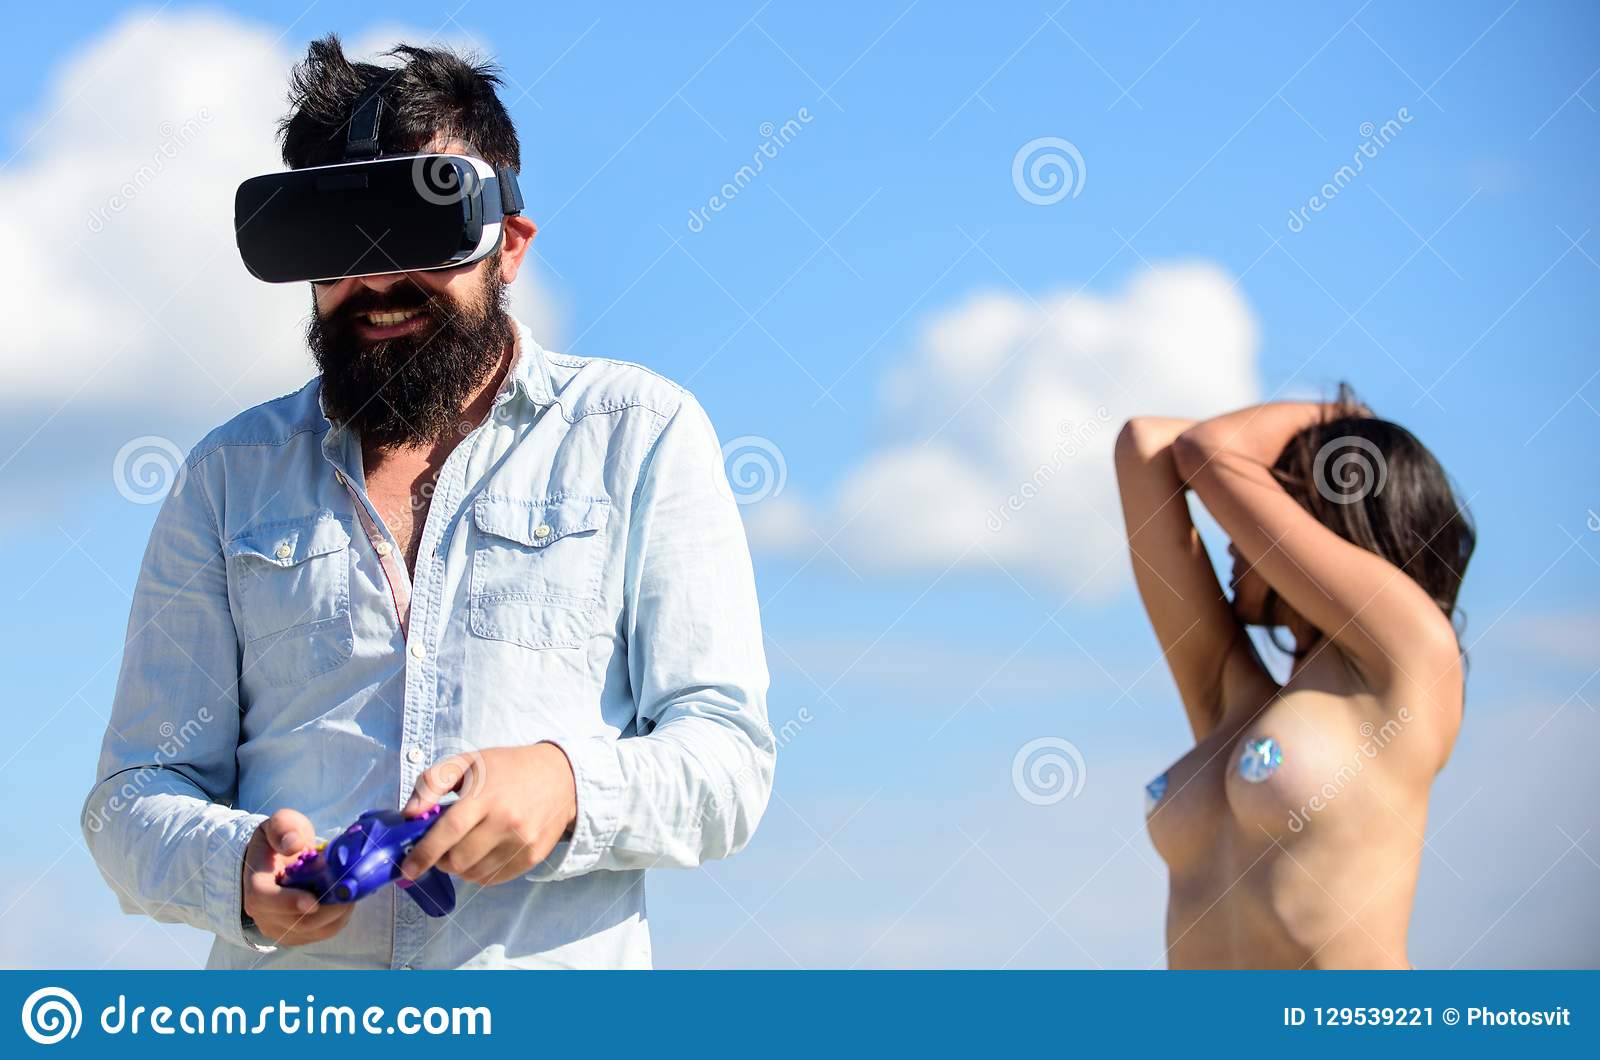 virtual sex games for mac